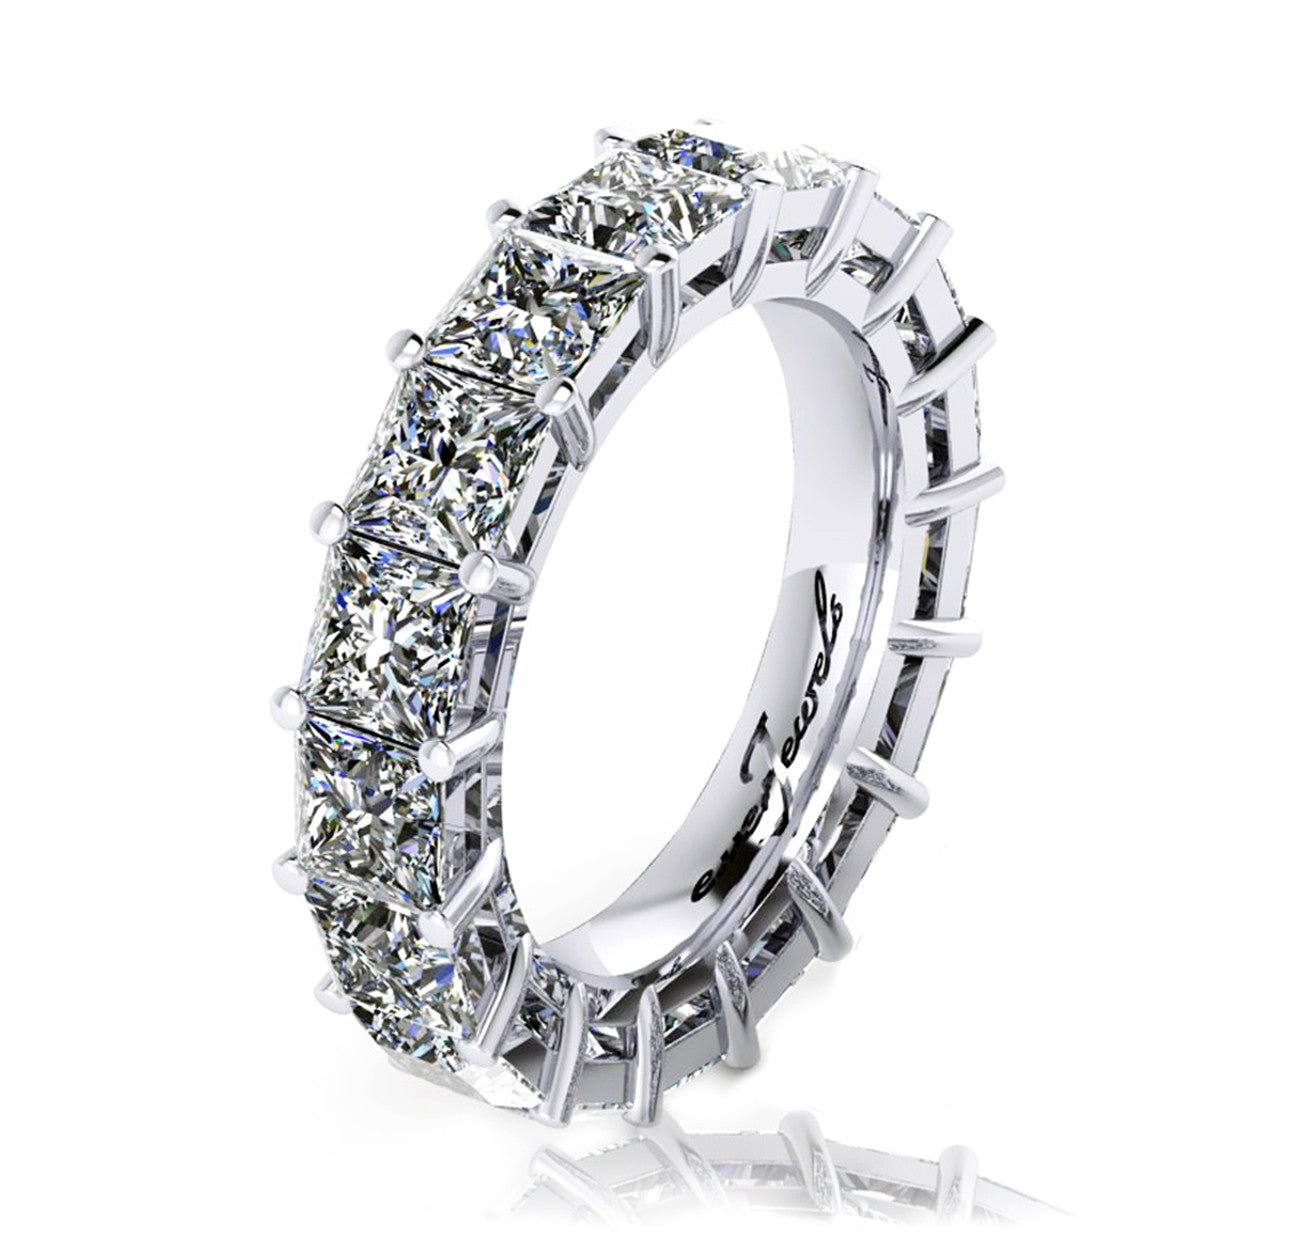 18ct White gold princess cut diamond eternity wedding band - ForeverJewels Design Studio 8